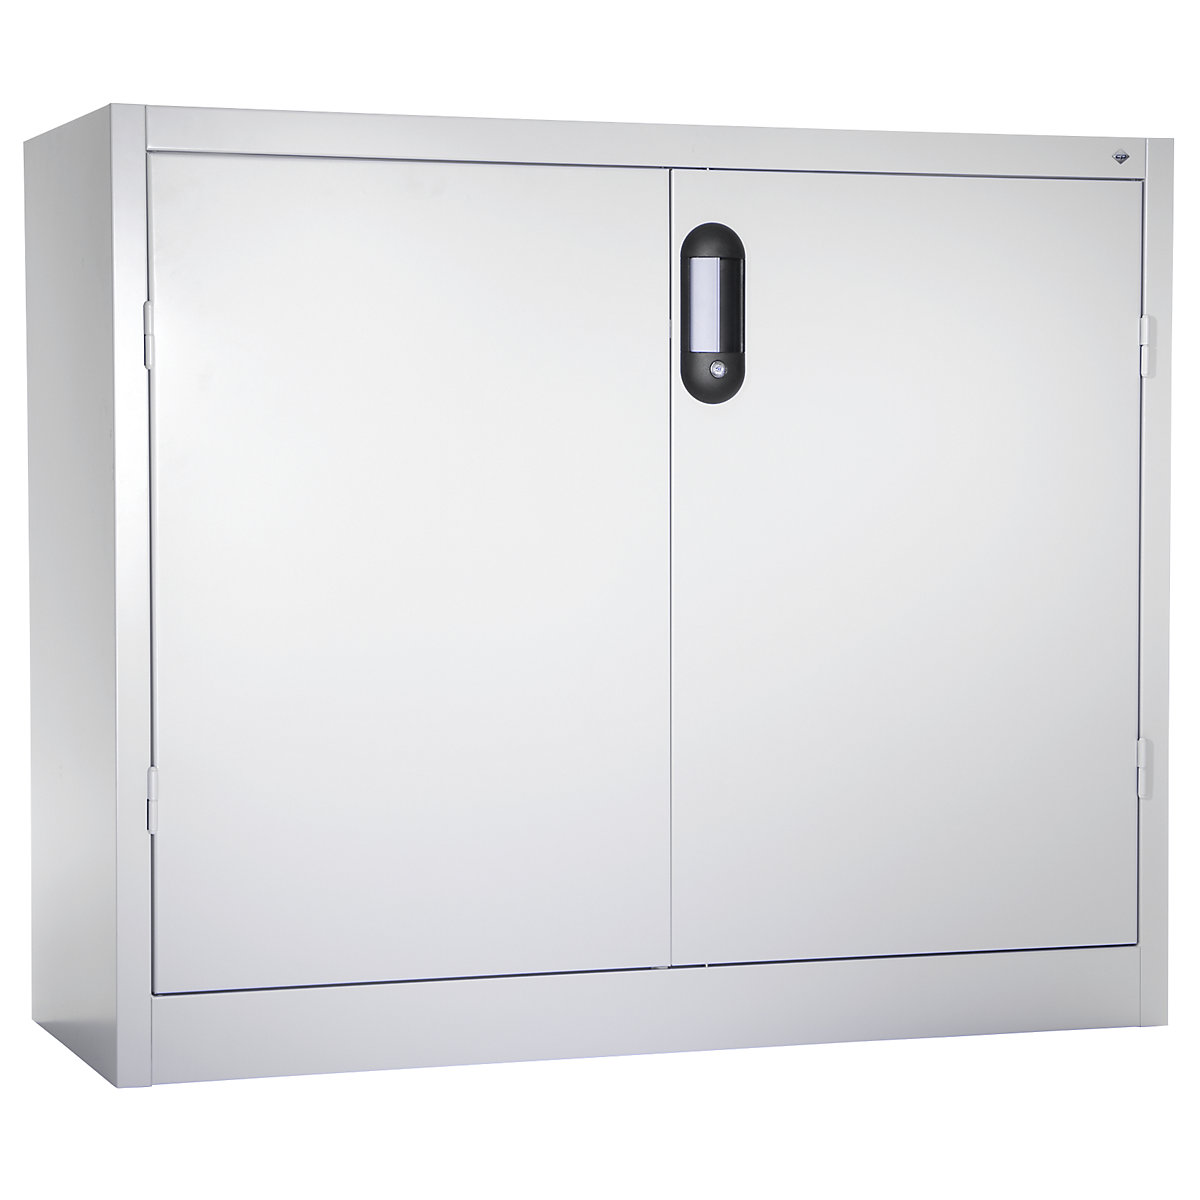 Large cupboard – C+P, HxW 1000 x 1200 mm, two colour, depth 500 mm, light grey doors-10